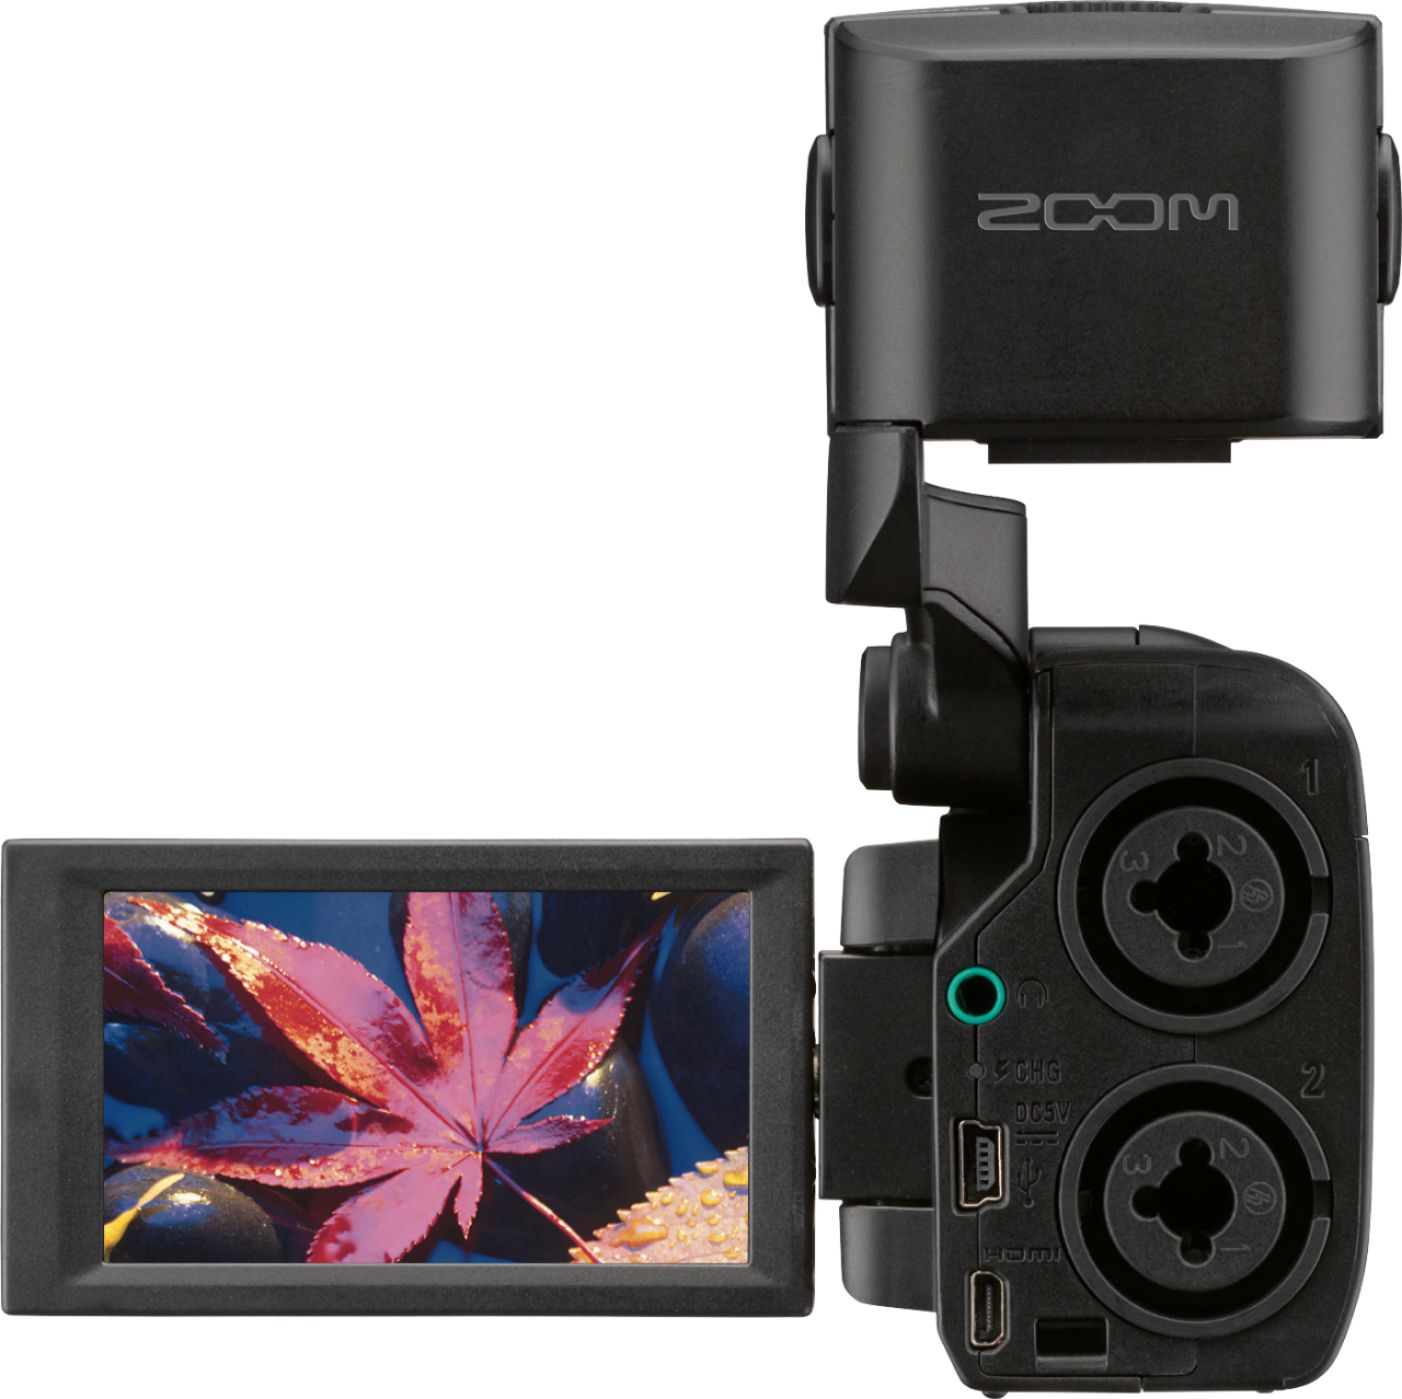 Back View: Zoom - Q8 HD Camcorder - Black